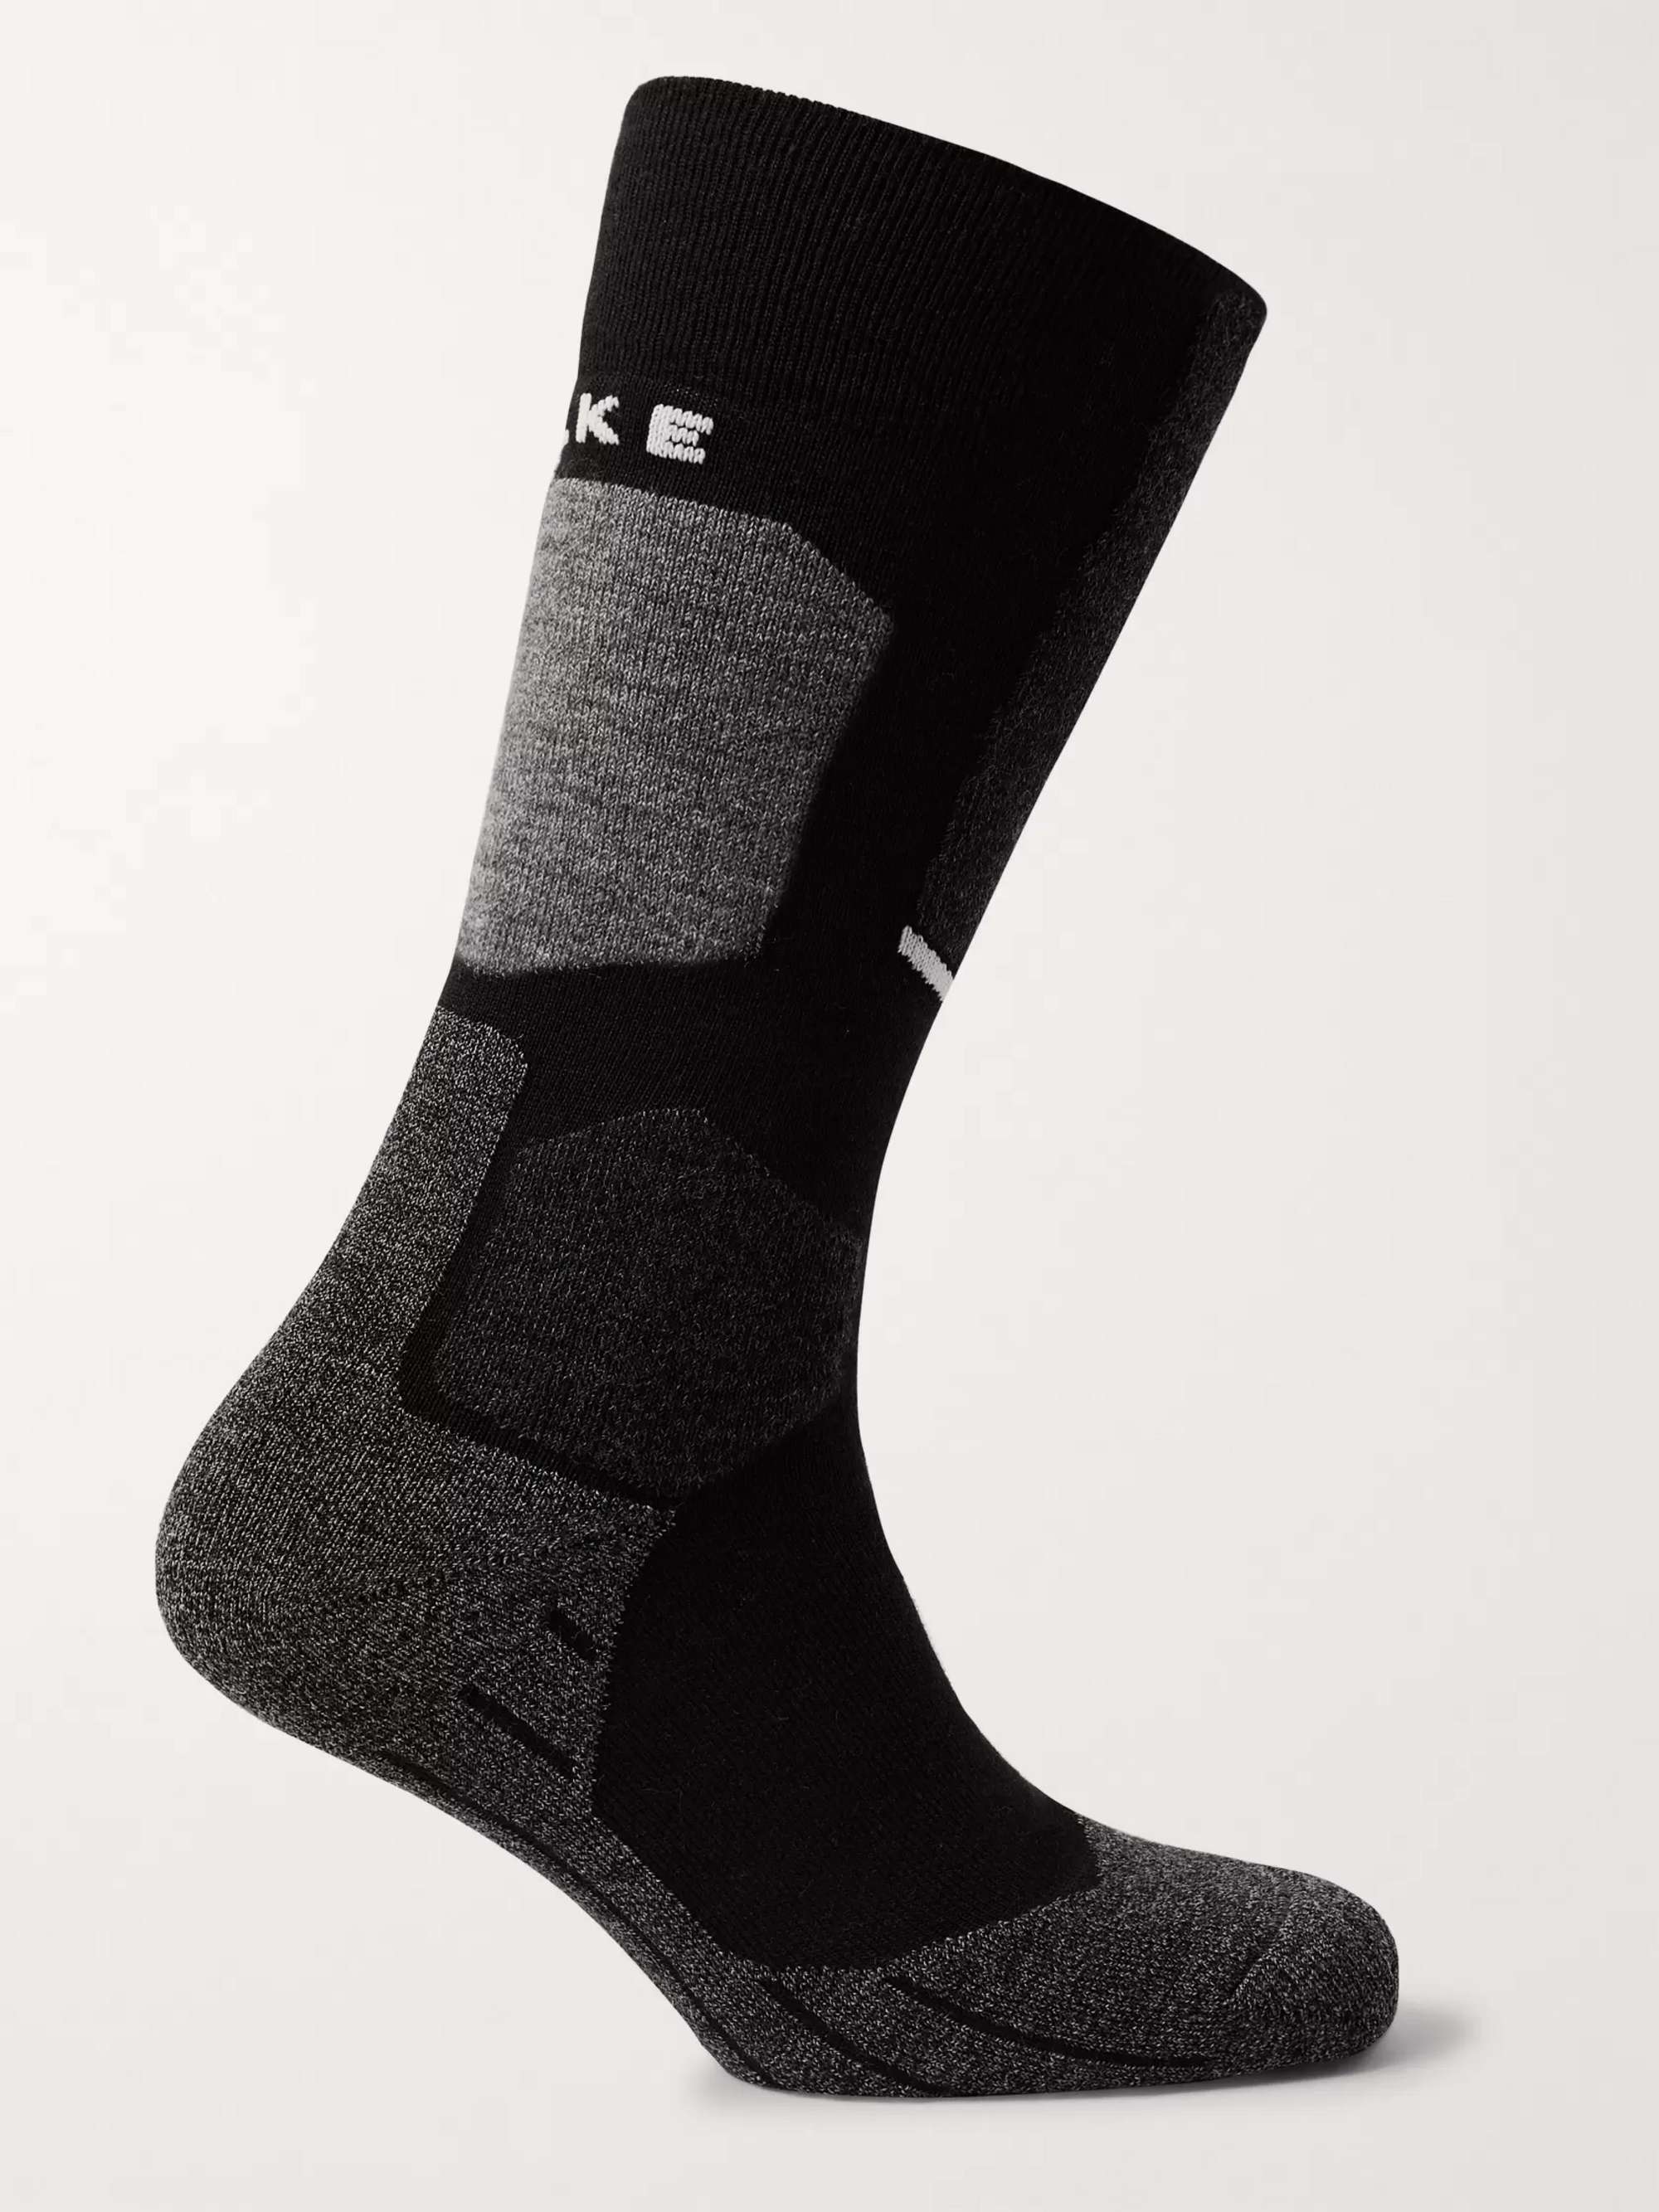 FALKE ERGONOMIC SPORT SYSTEM SK2 Stretch-Knit Socks